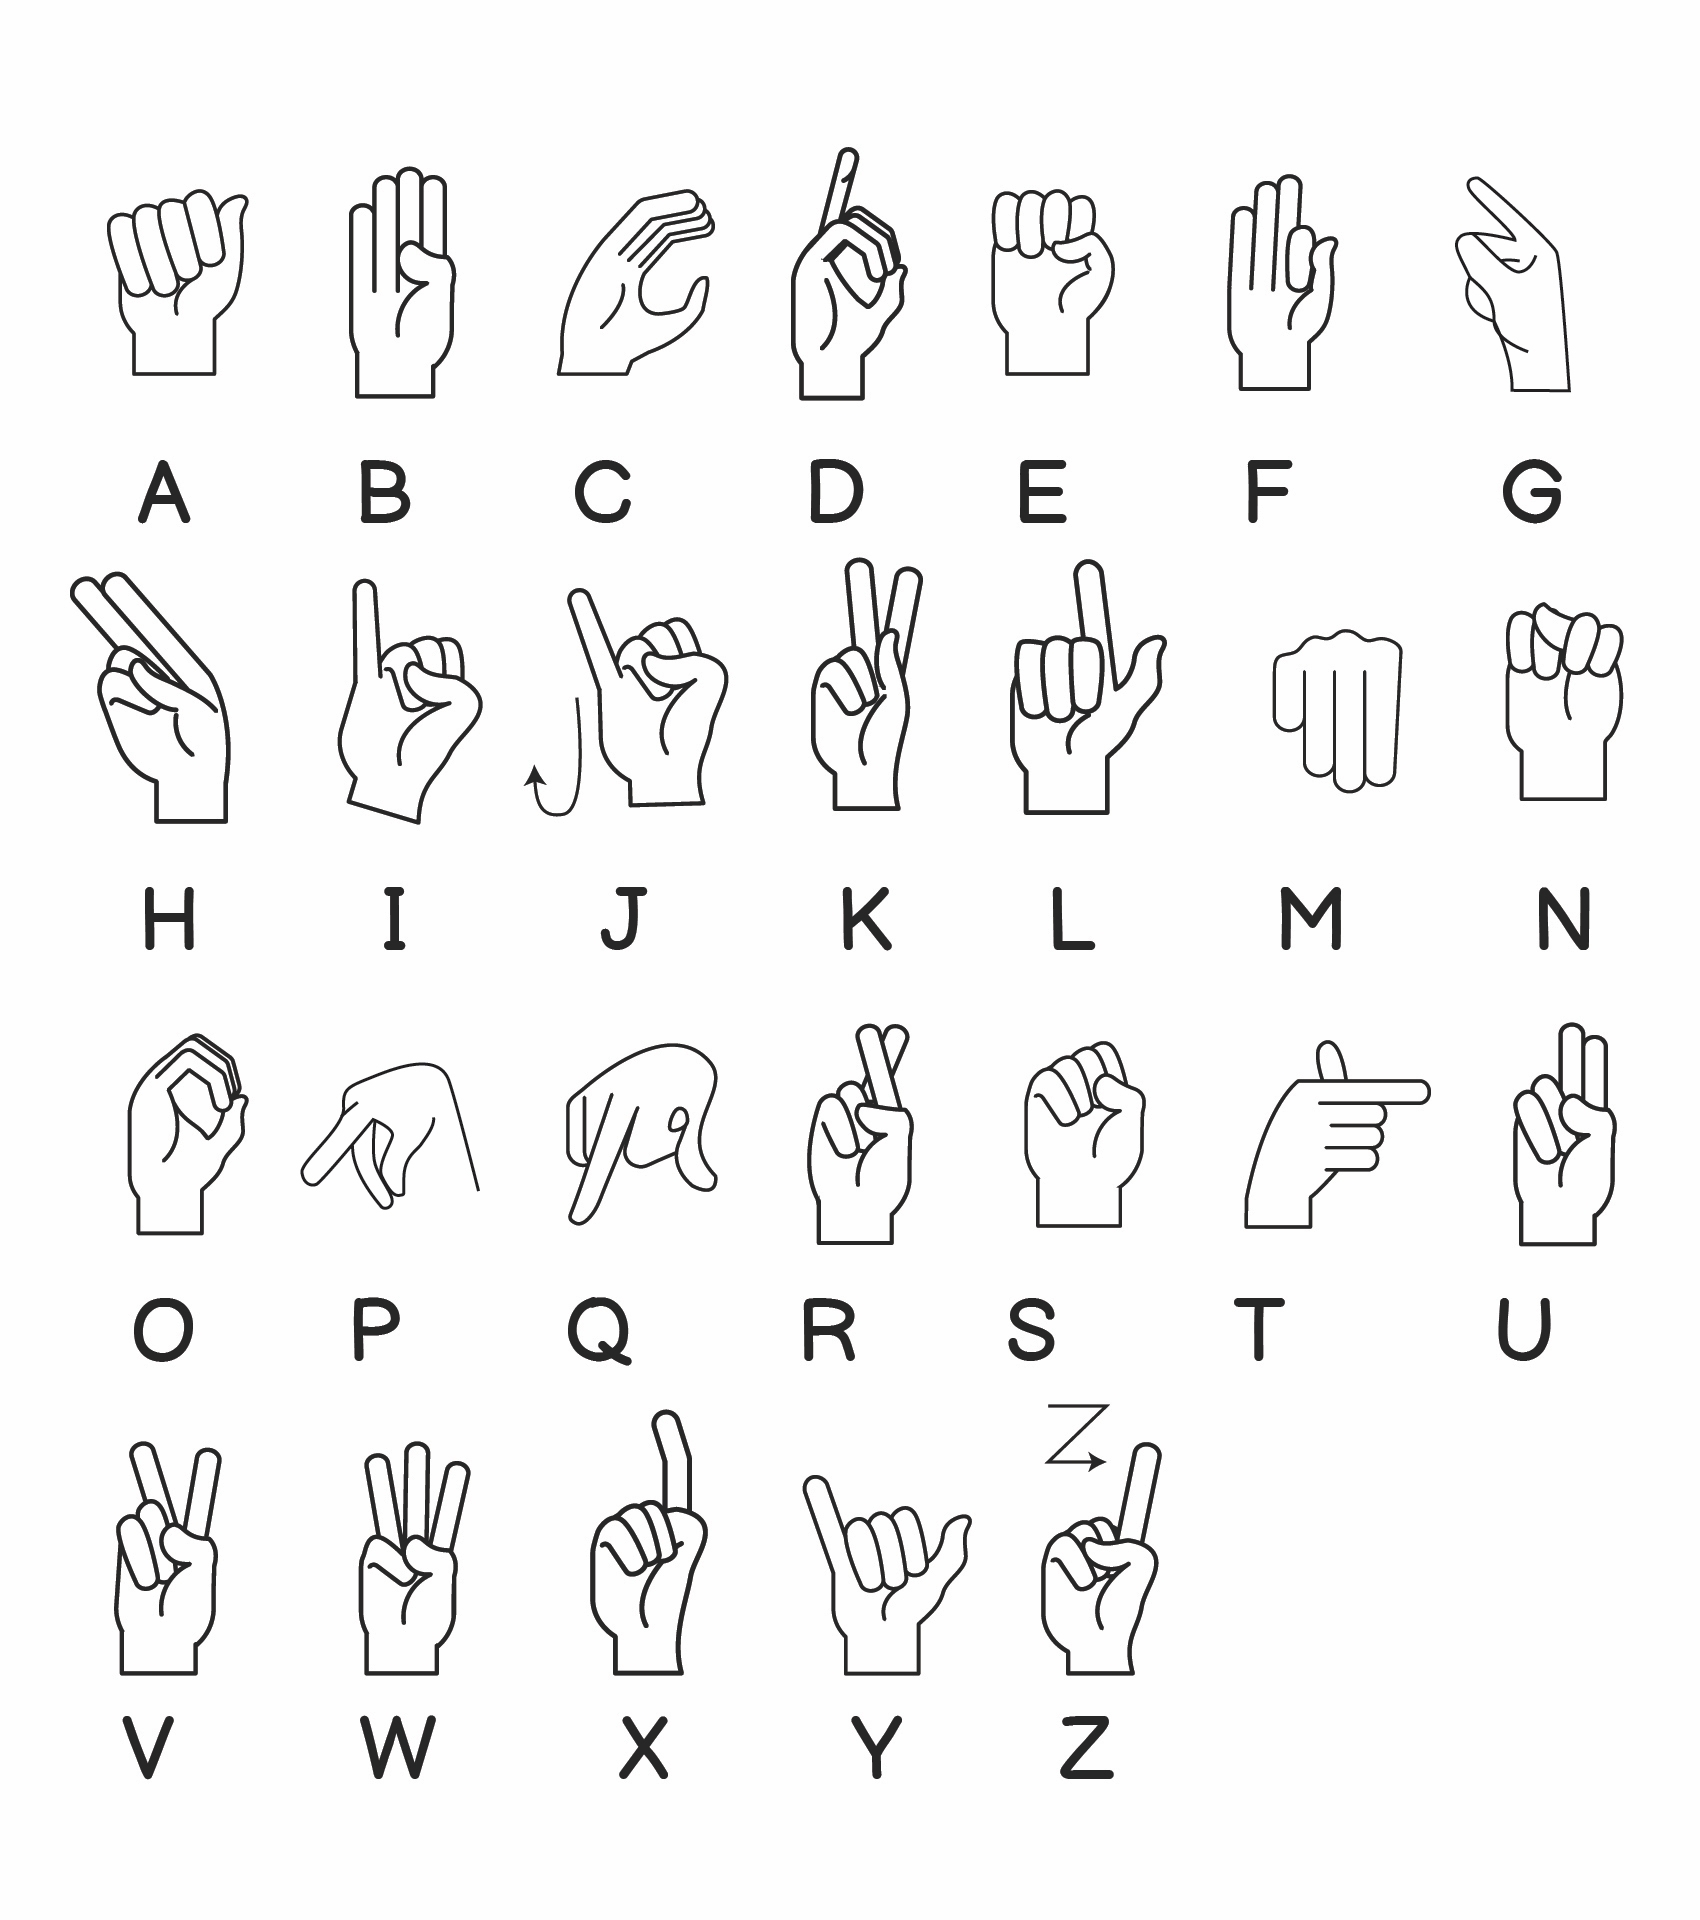 5-best-images-of-printable-american-sign-language-words-asl-american